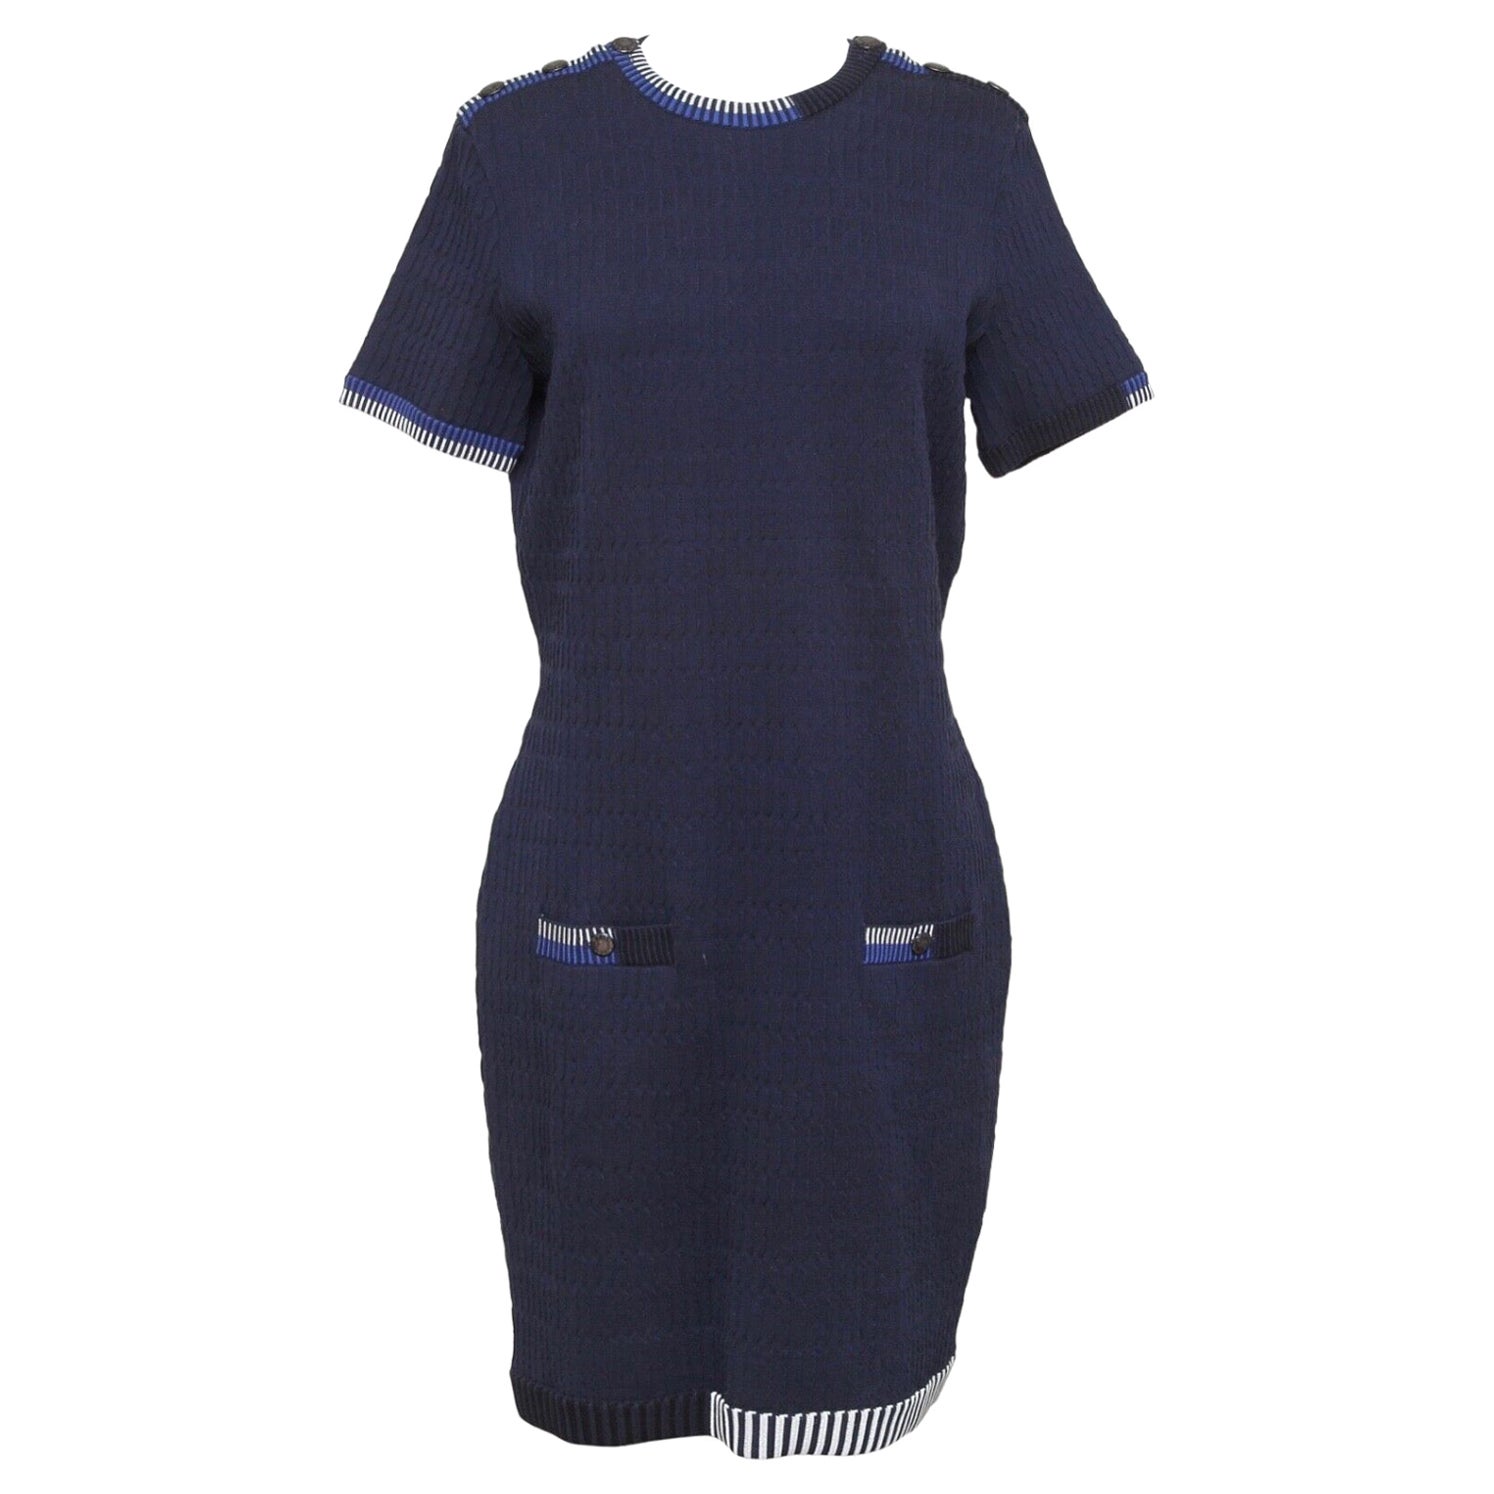 CHANEL Sweater Knit Dress Navy Blue White Short Sleeve Sz 42